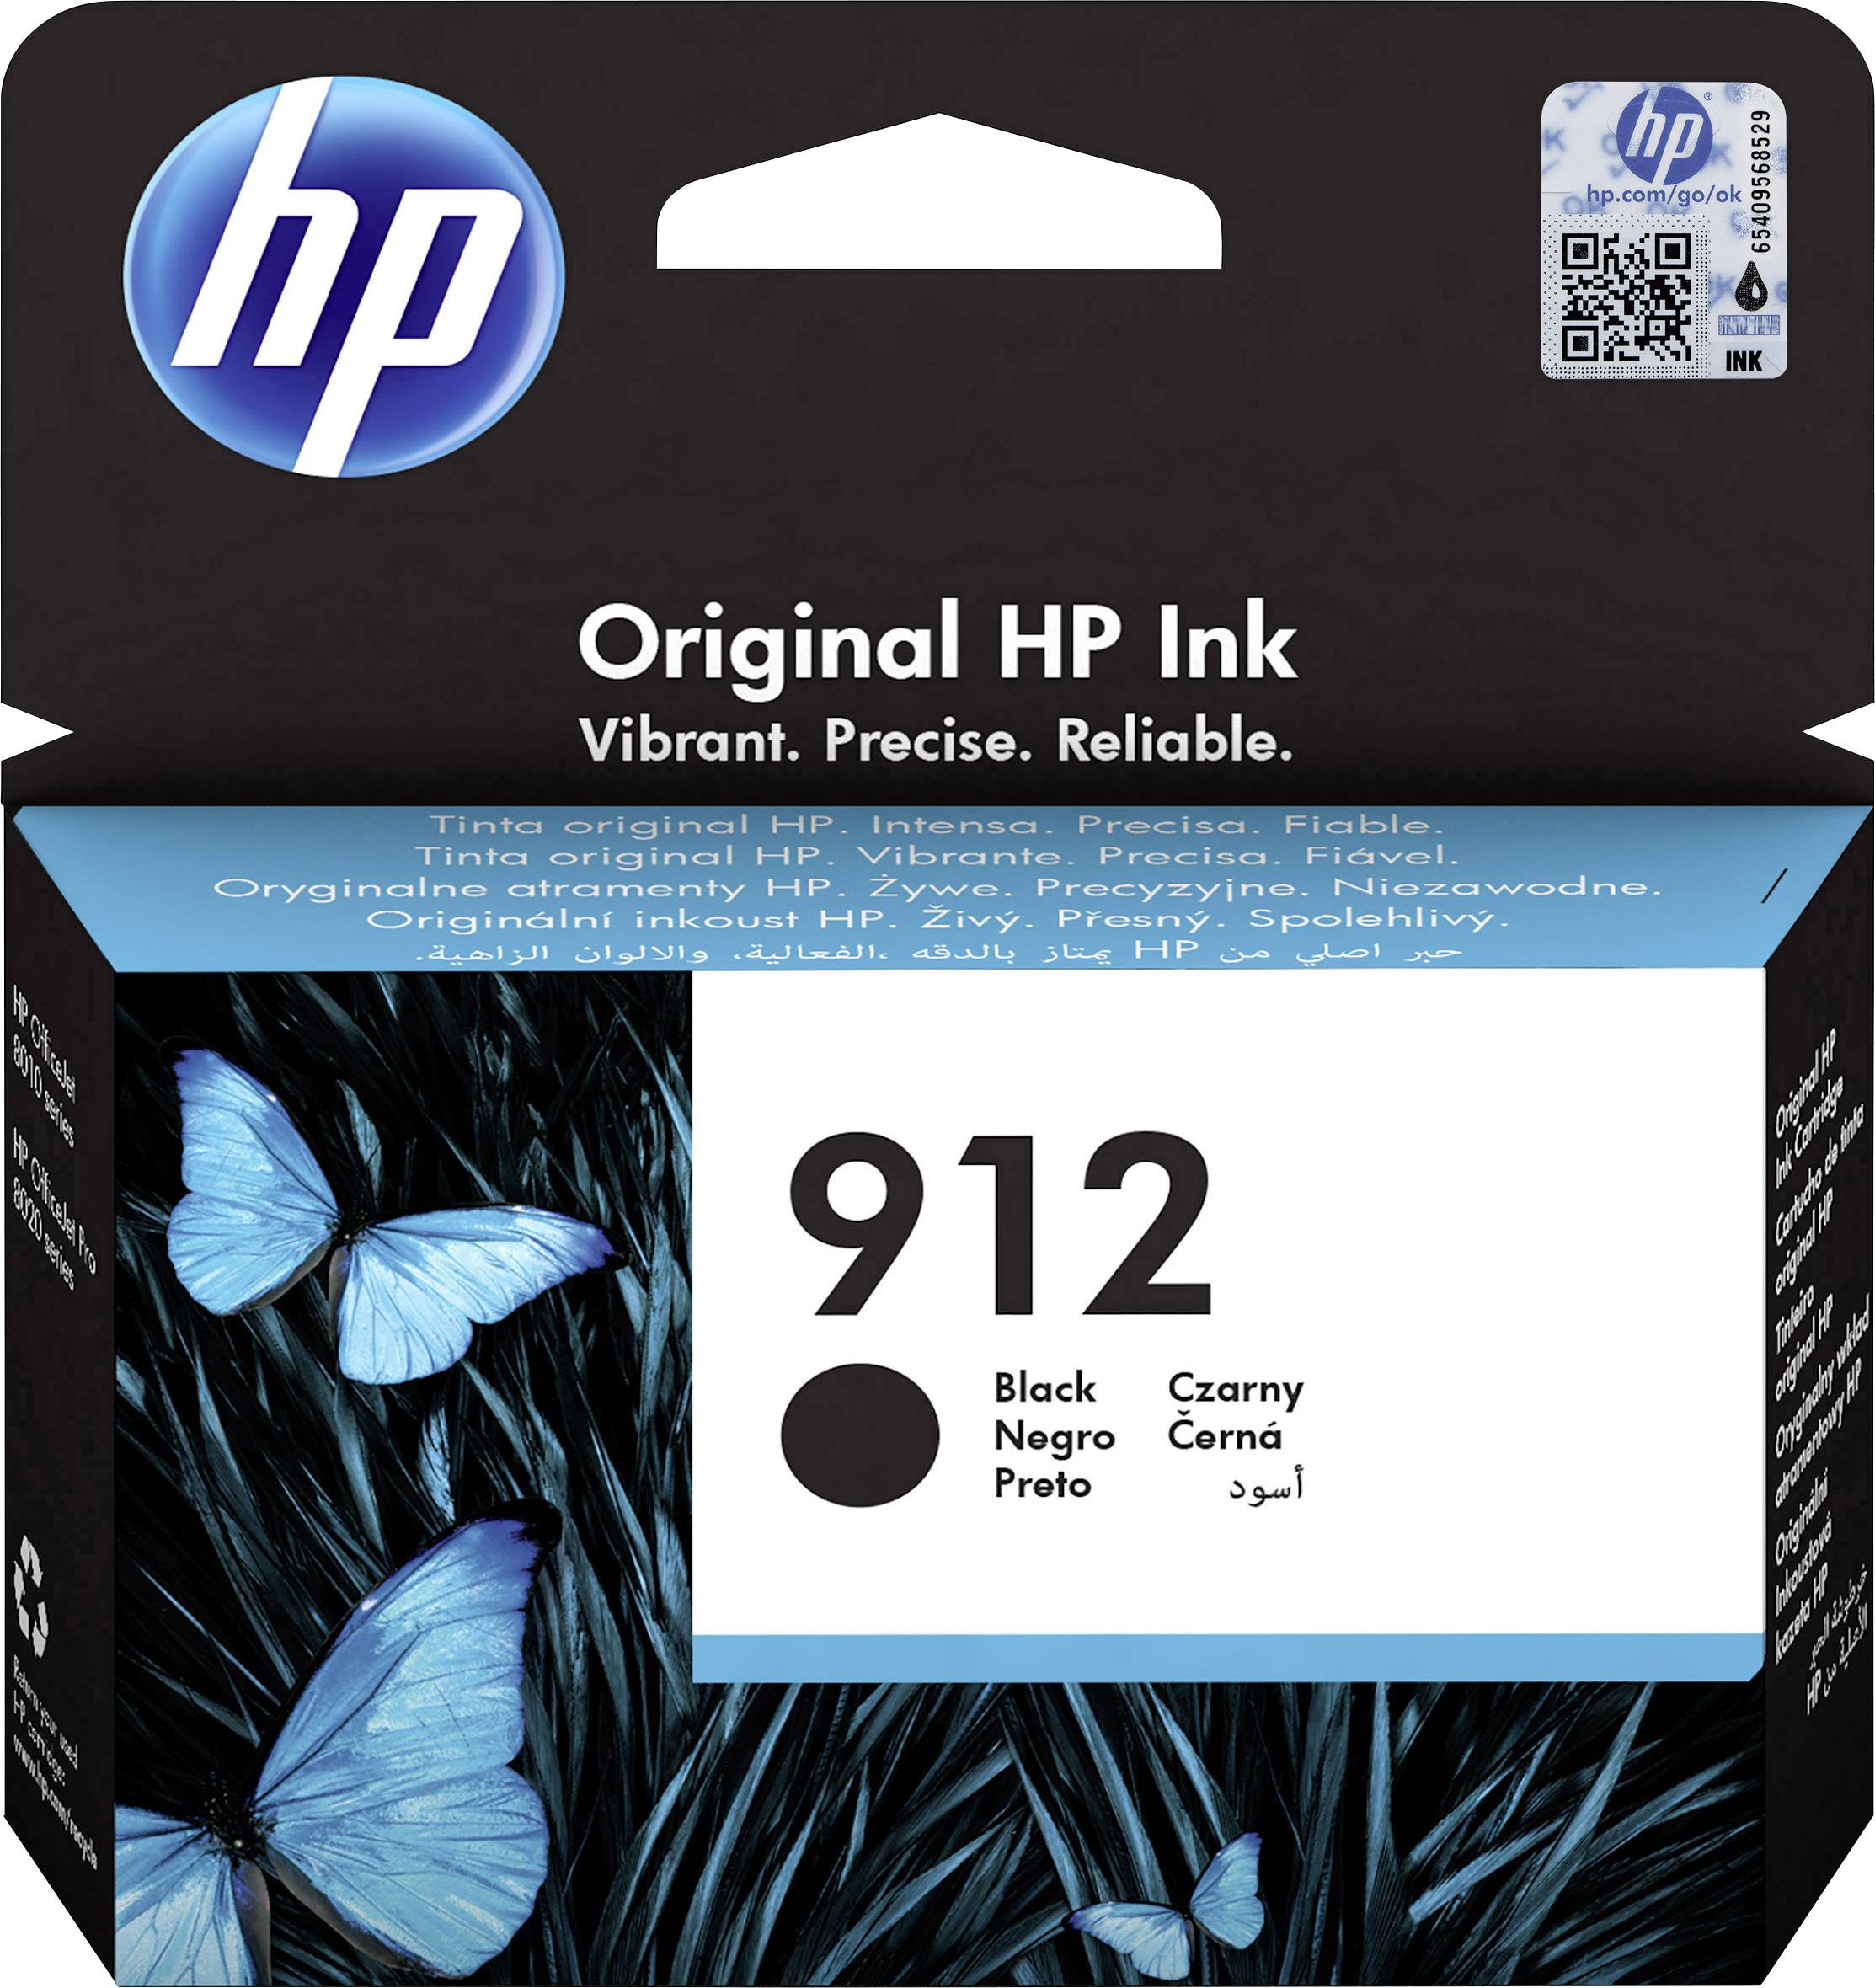 HP 912 Black Original Ink Cartridge